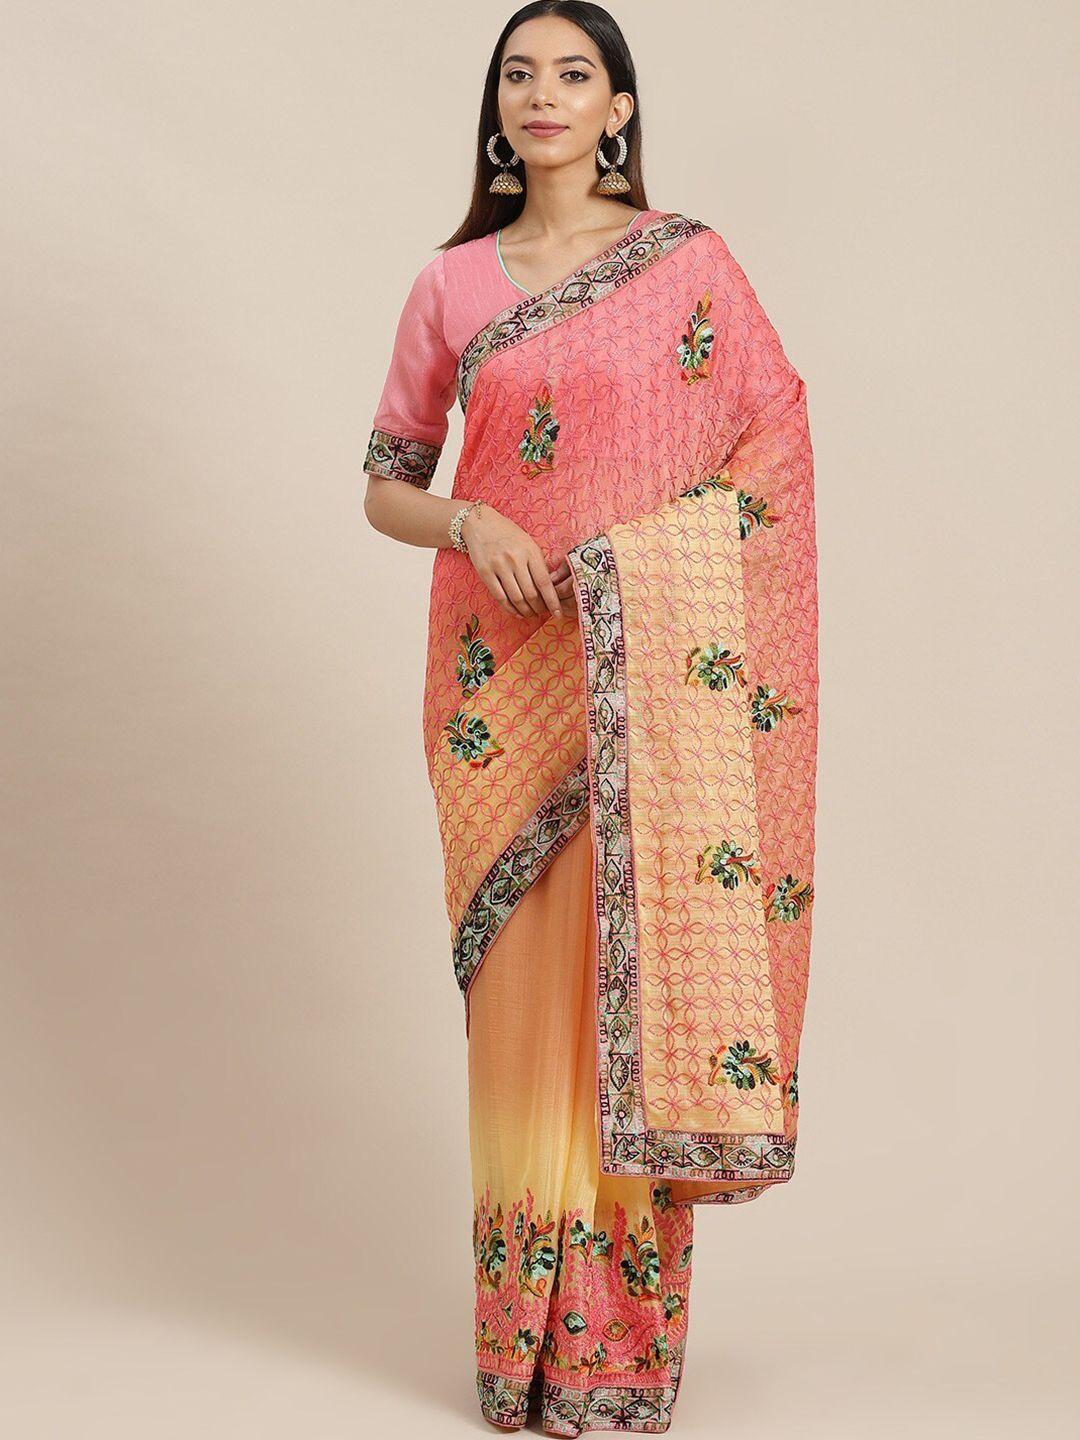 kalini floral embroidered pure chiffon saree